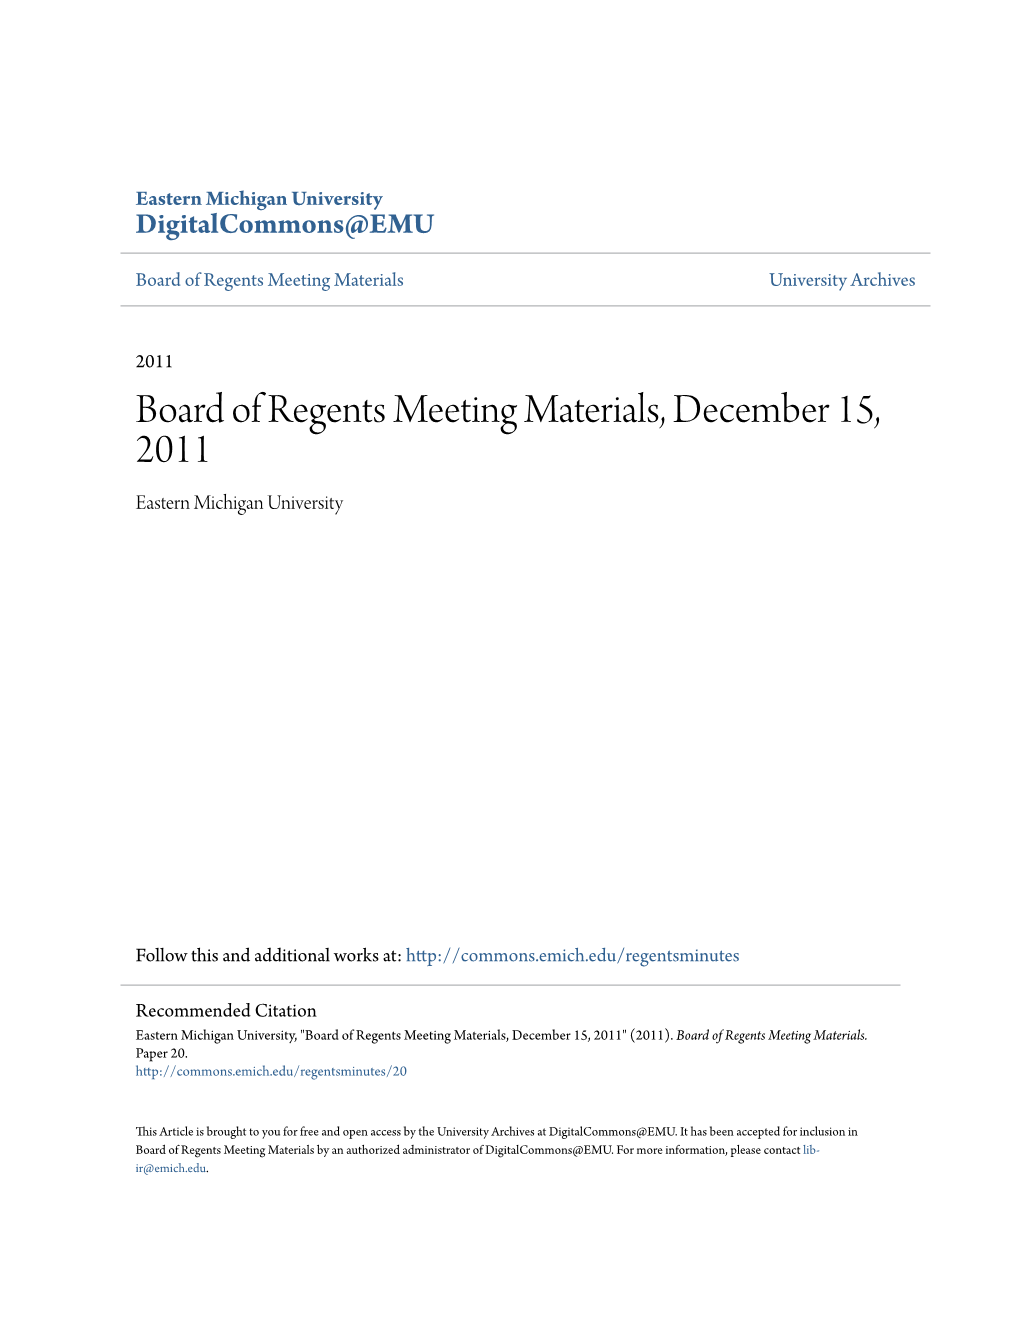 Board of Regents Meeting Materials, December 15, 2011 Eastern Michigan University